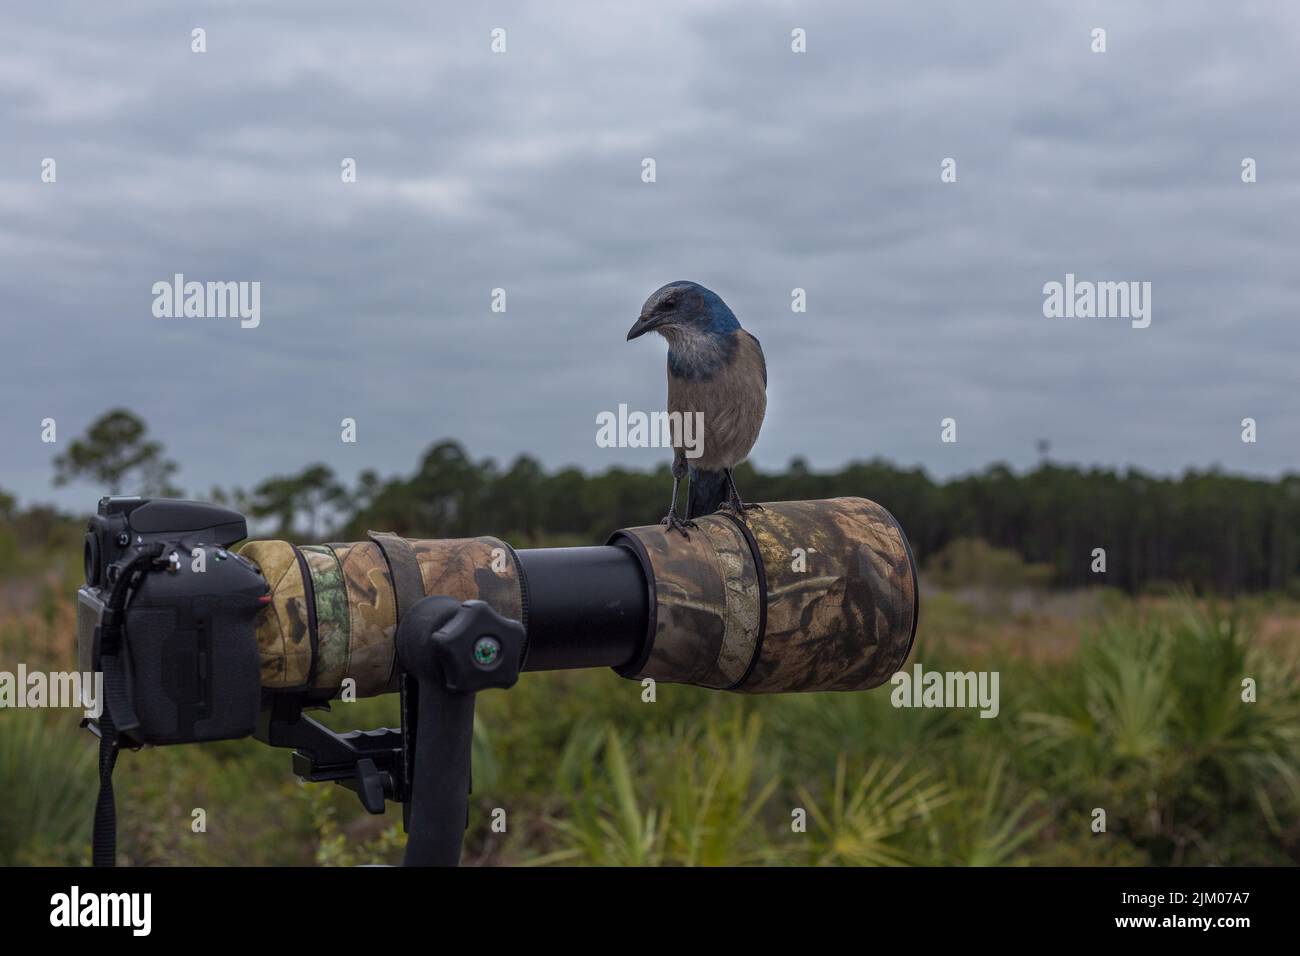 A blue scrub jay perched on a professional camera in Merritt Island, Florida Stock Photo